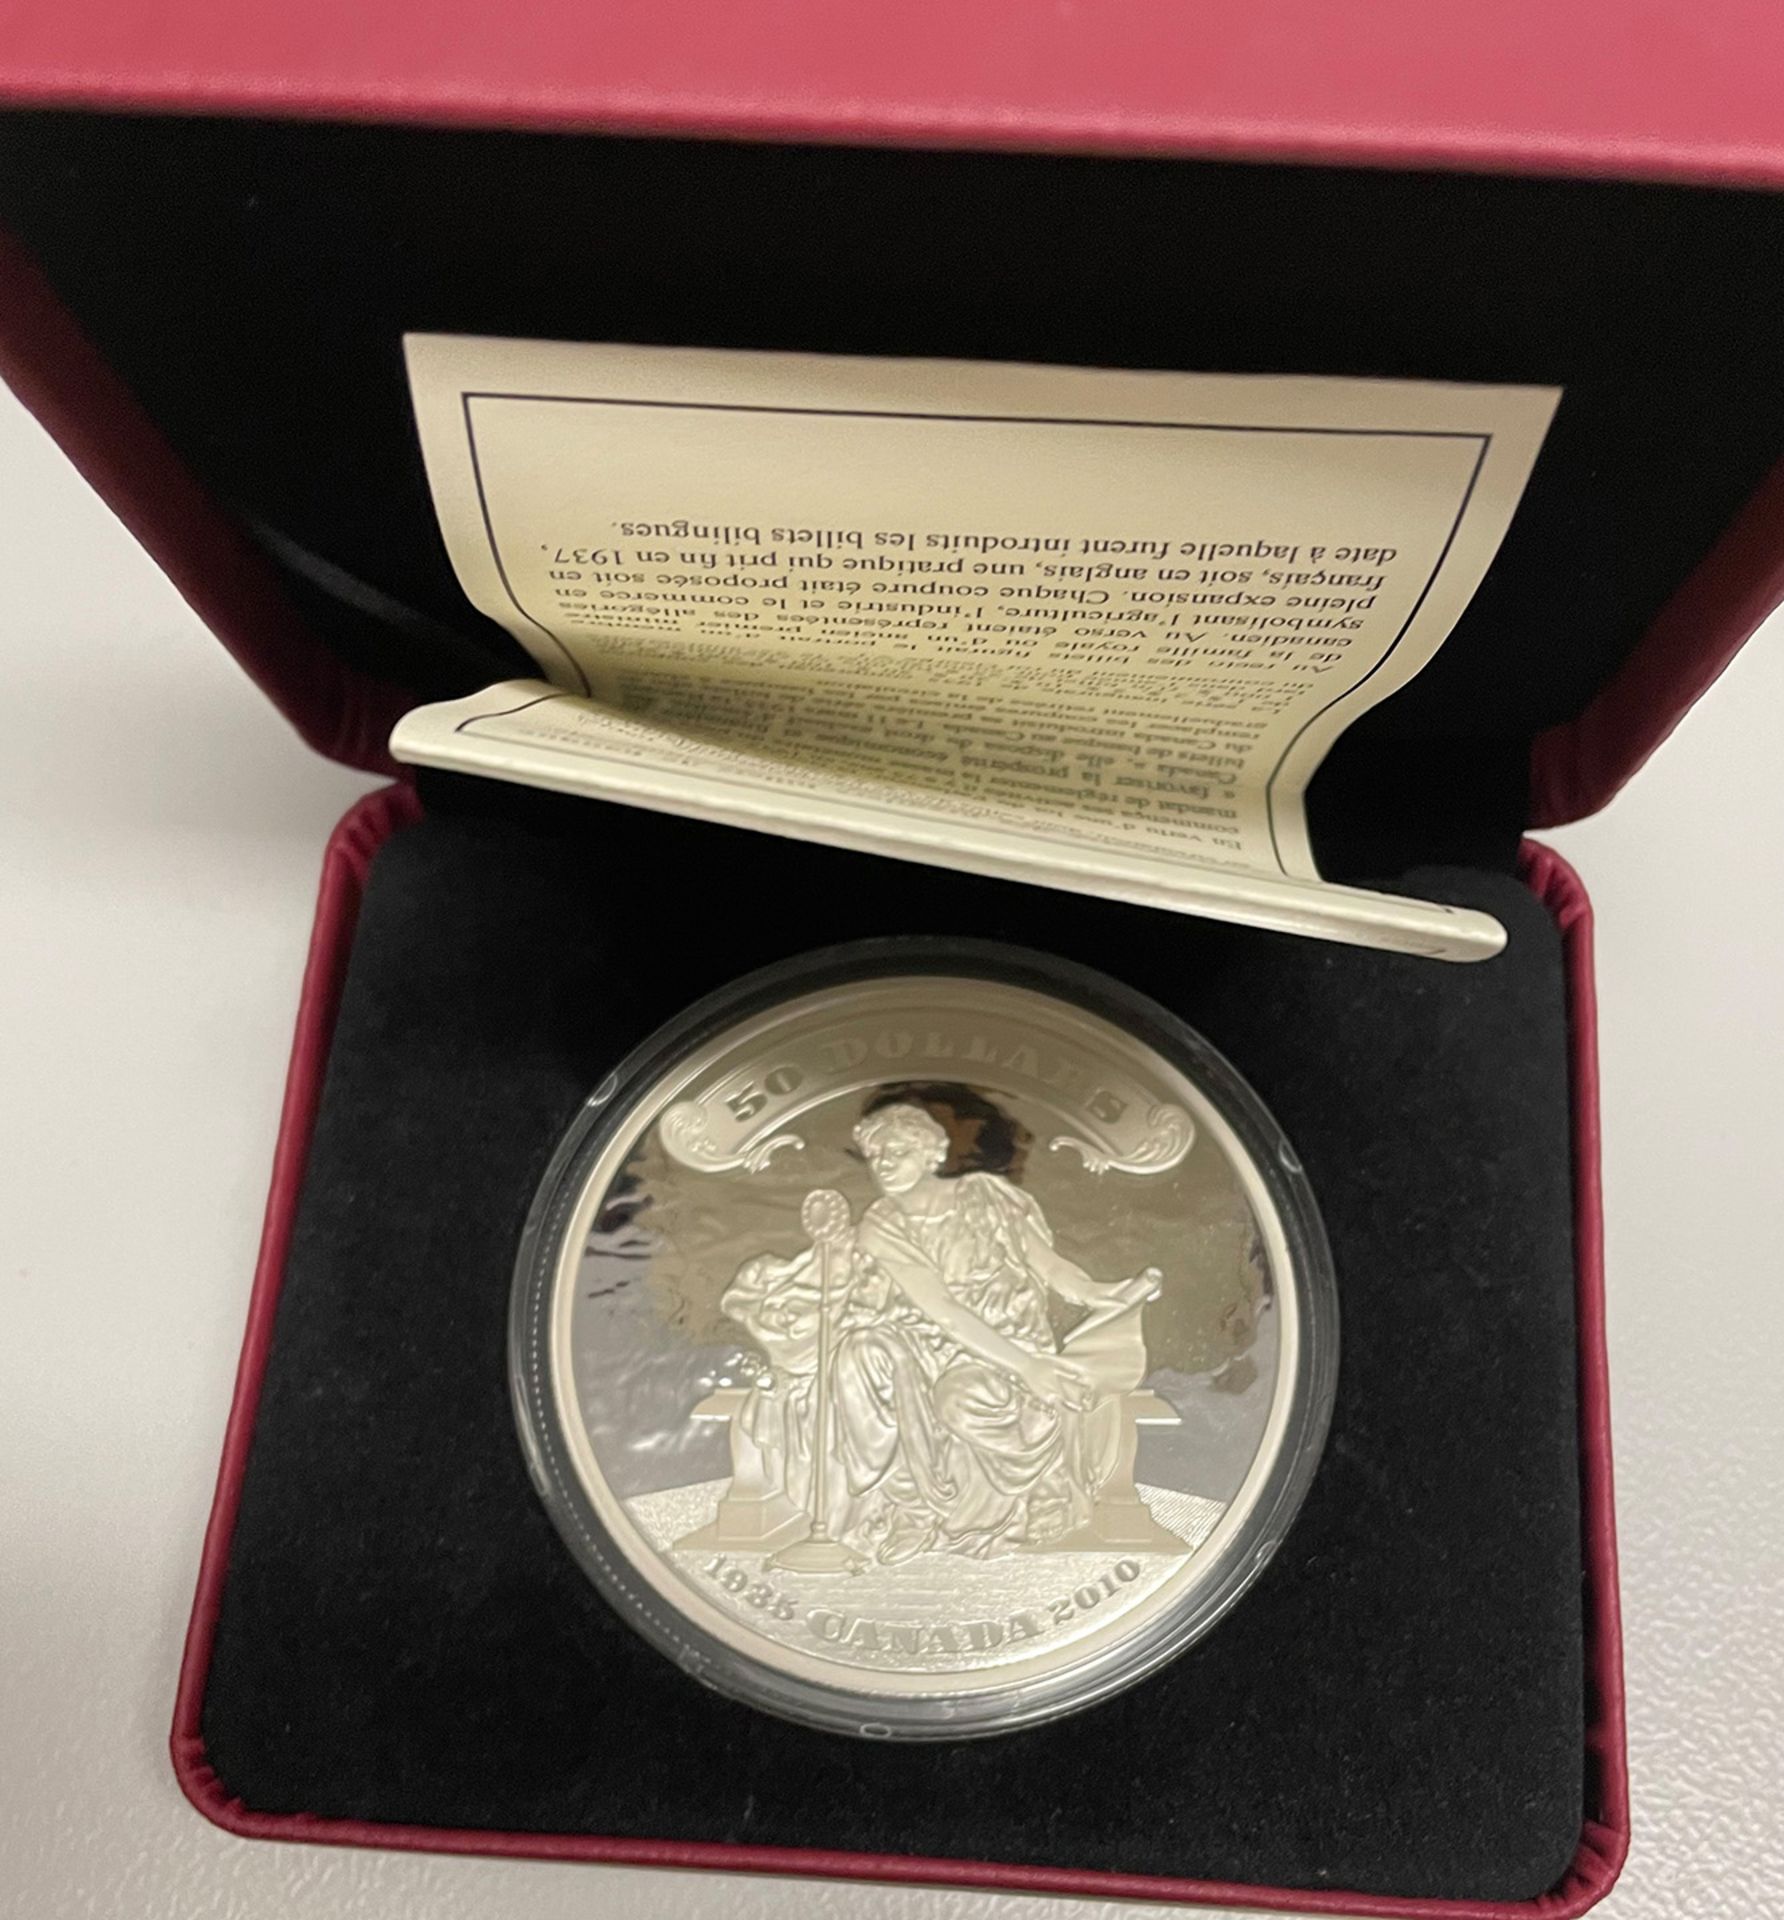 Silber Münzen Konvolut, Canada, Silber Dollars: 1 x 50 Dollar 2010 5-0unce Silver Coin, 99,99 % pure - Bild 3 aus 6